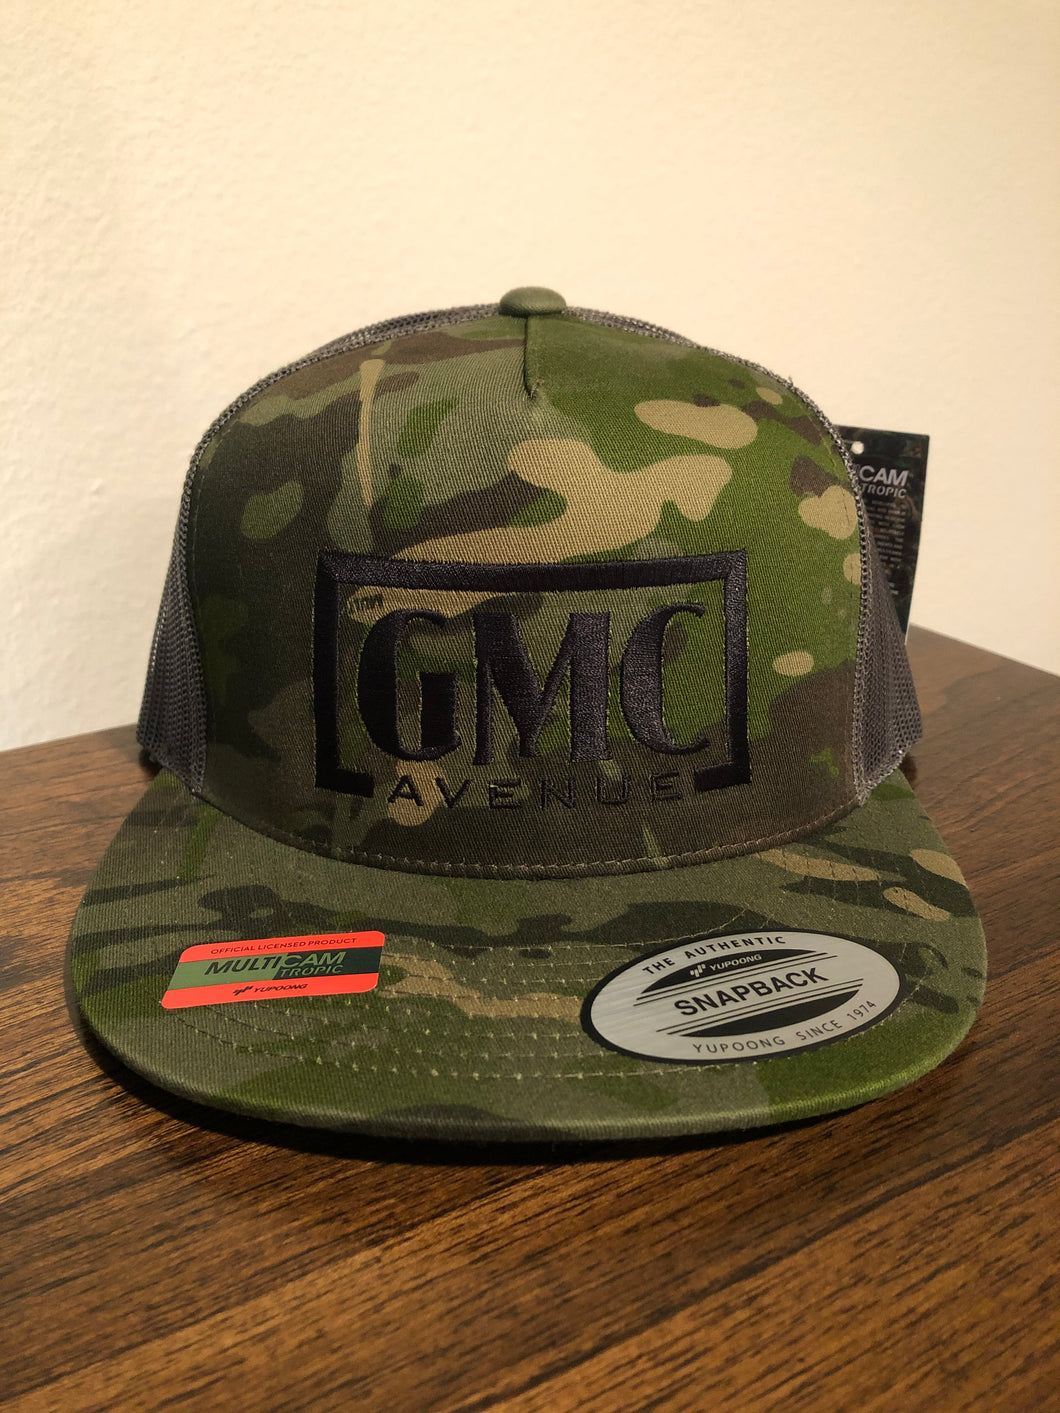 GMC AVE STAMP LOGO MULTICAM HAT BLACK STITCHING